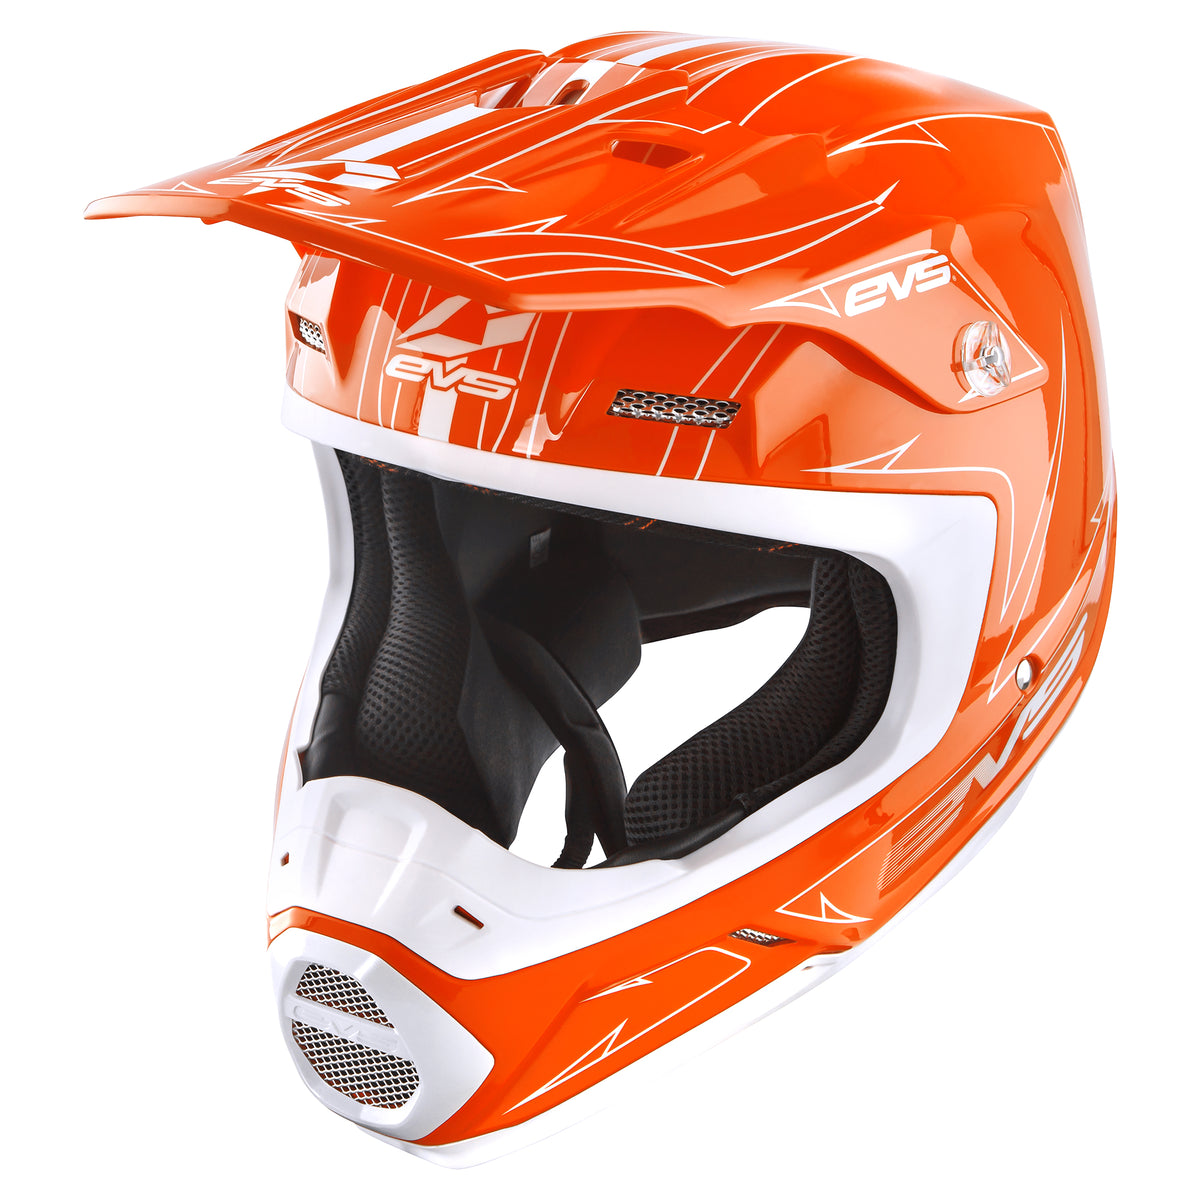 T5 Helmet - Pinner Orange - EVS Sports